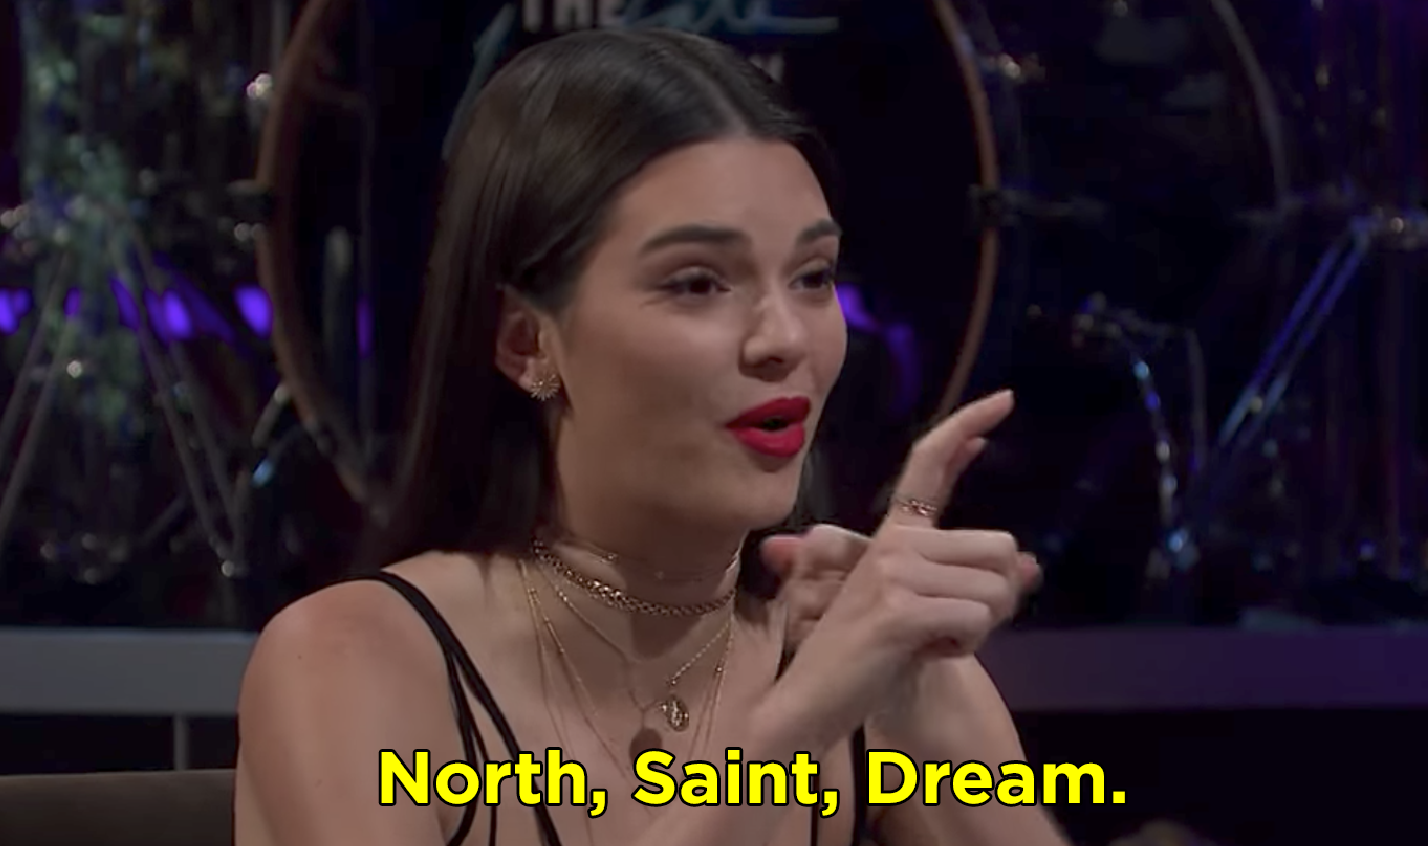 Kendall said North, Saint, Dream